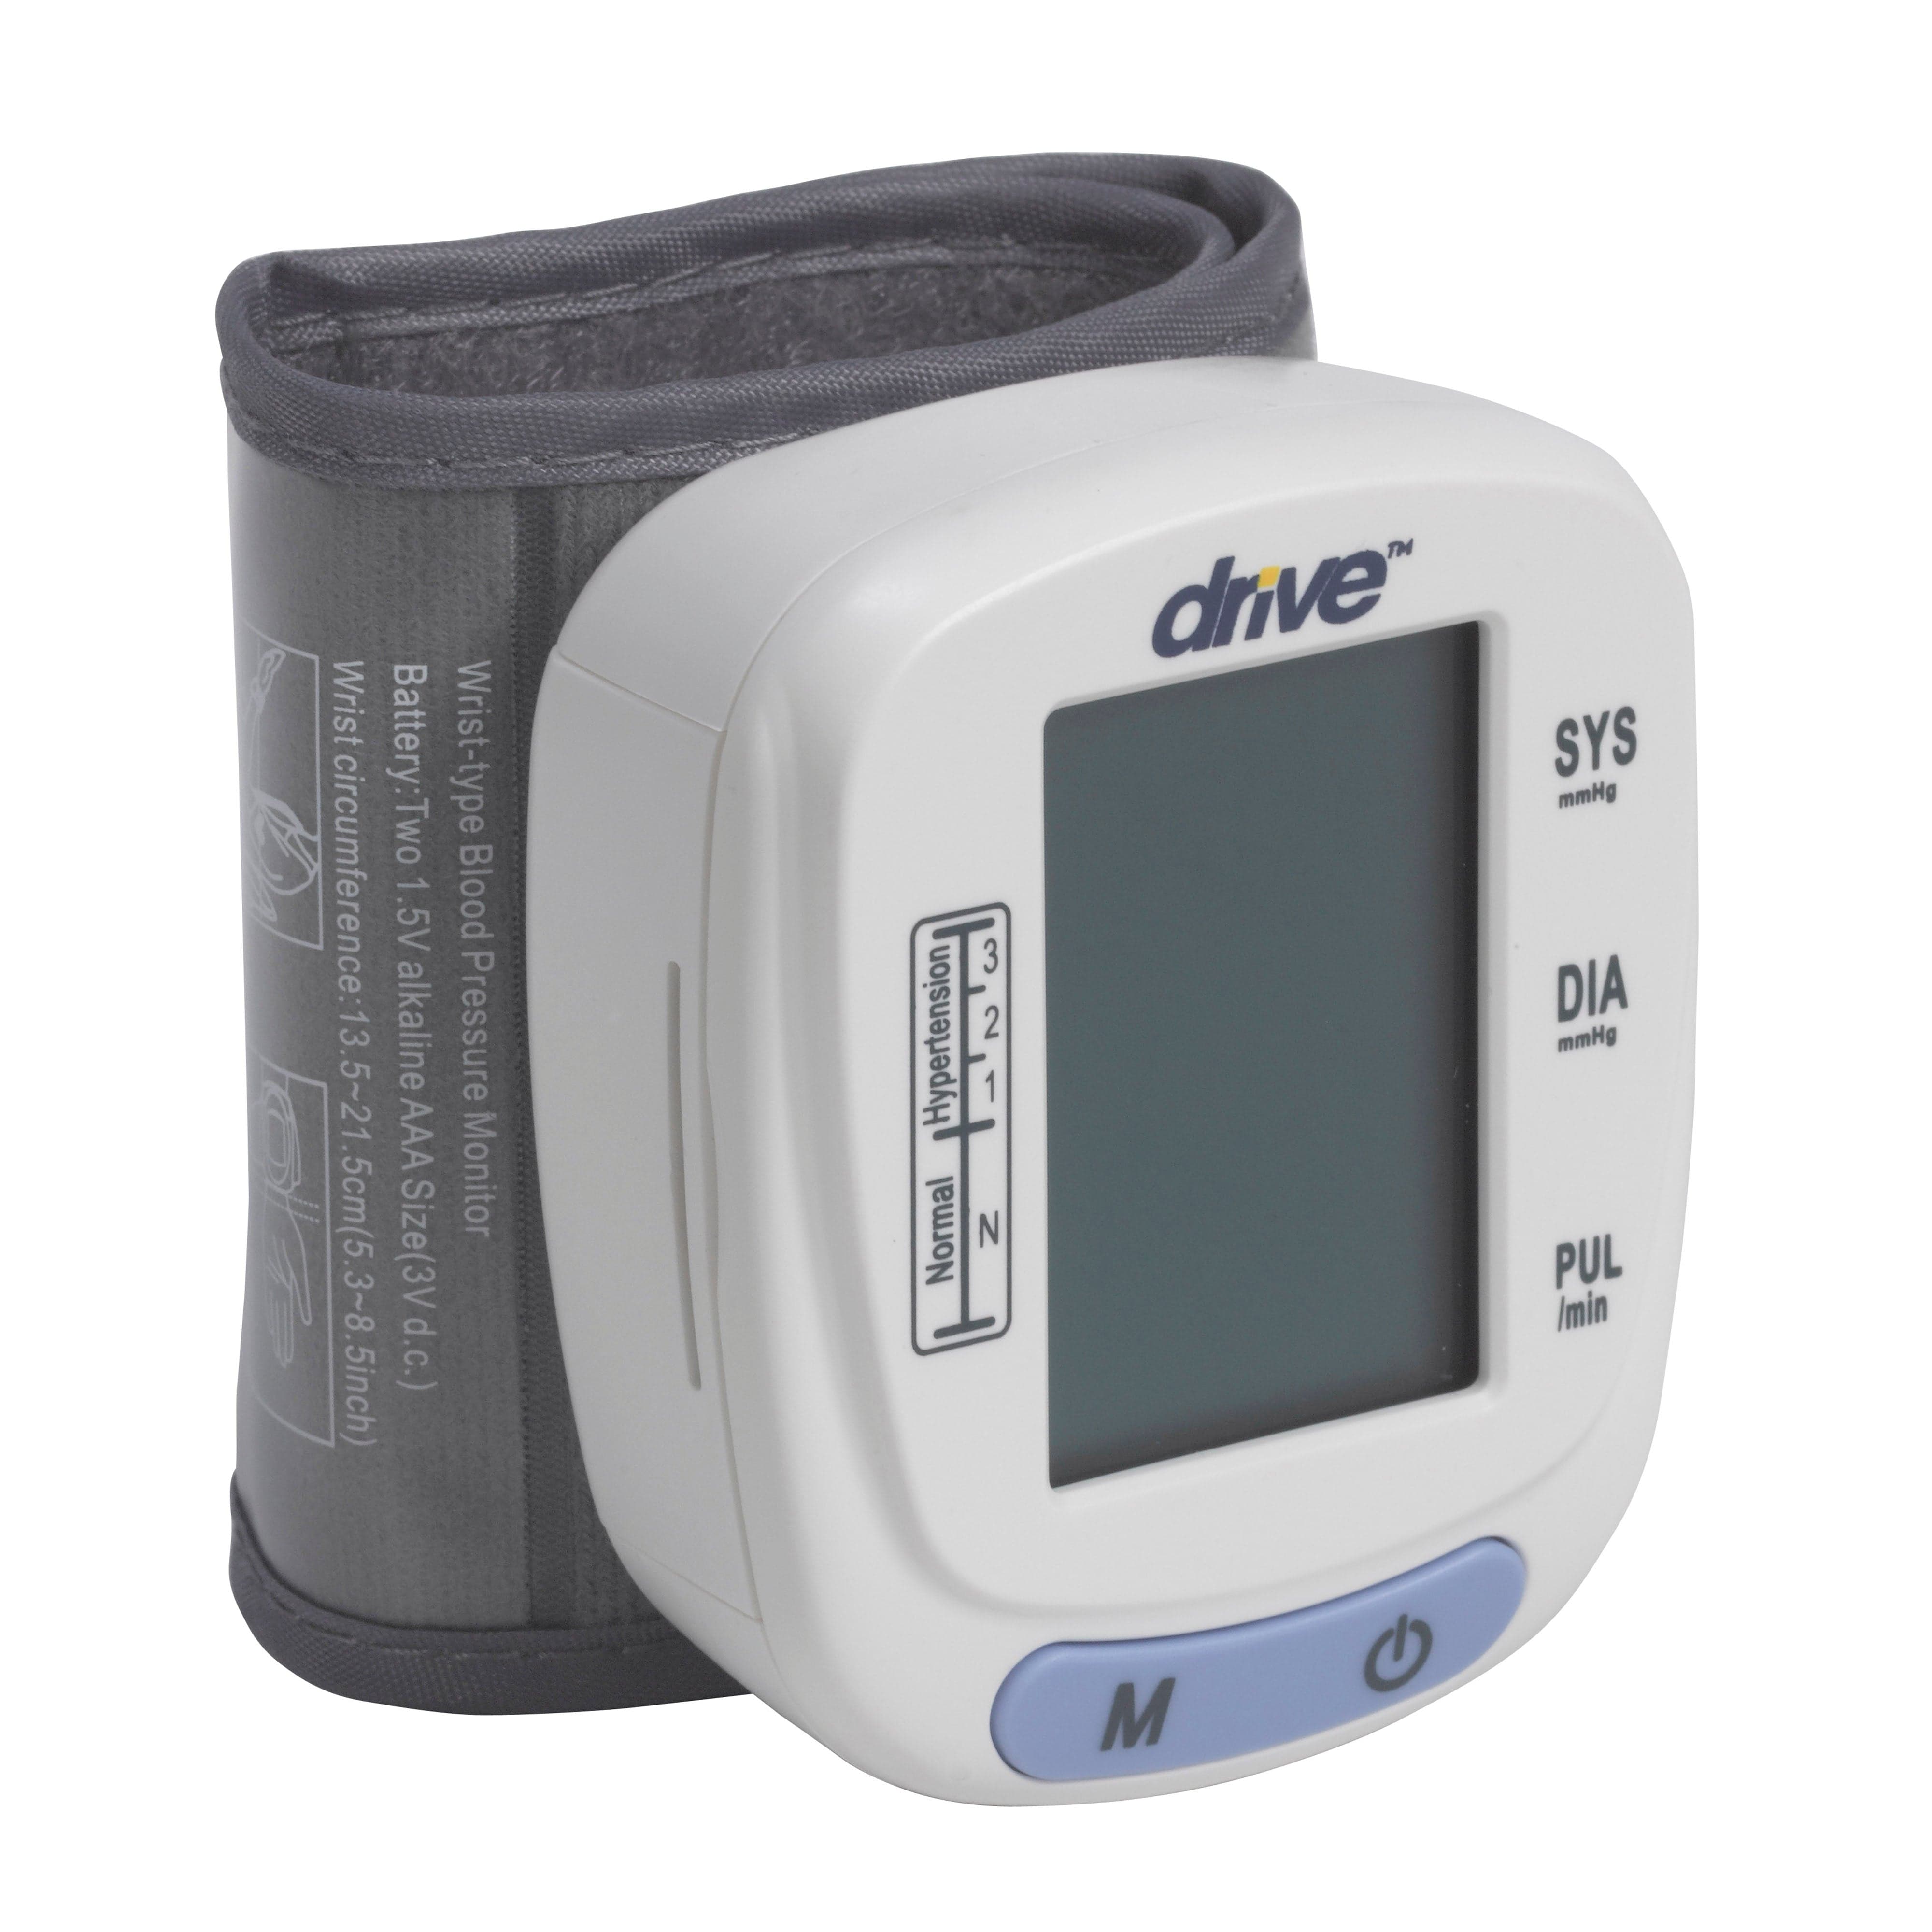 Drive Medical Drive Medical Automatic Blood Pressure Monitor, Wrist Model bp2116